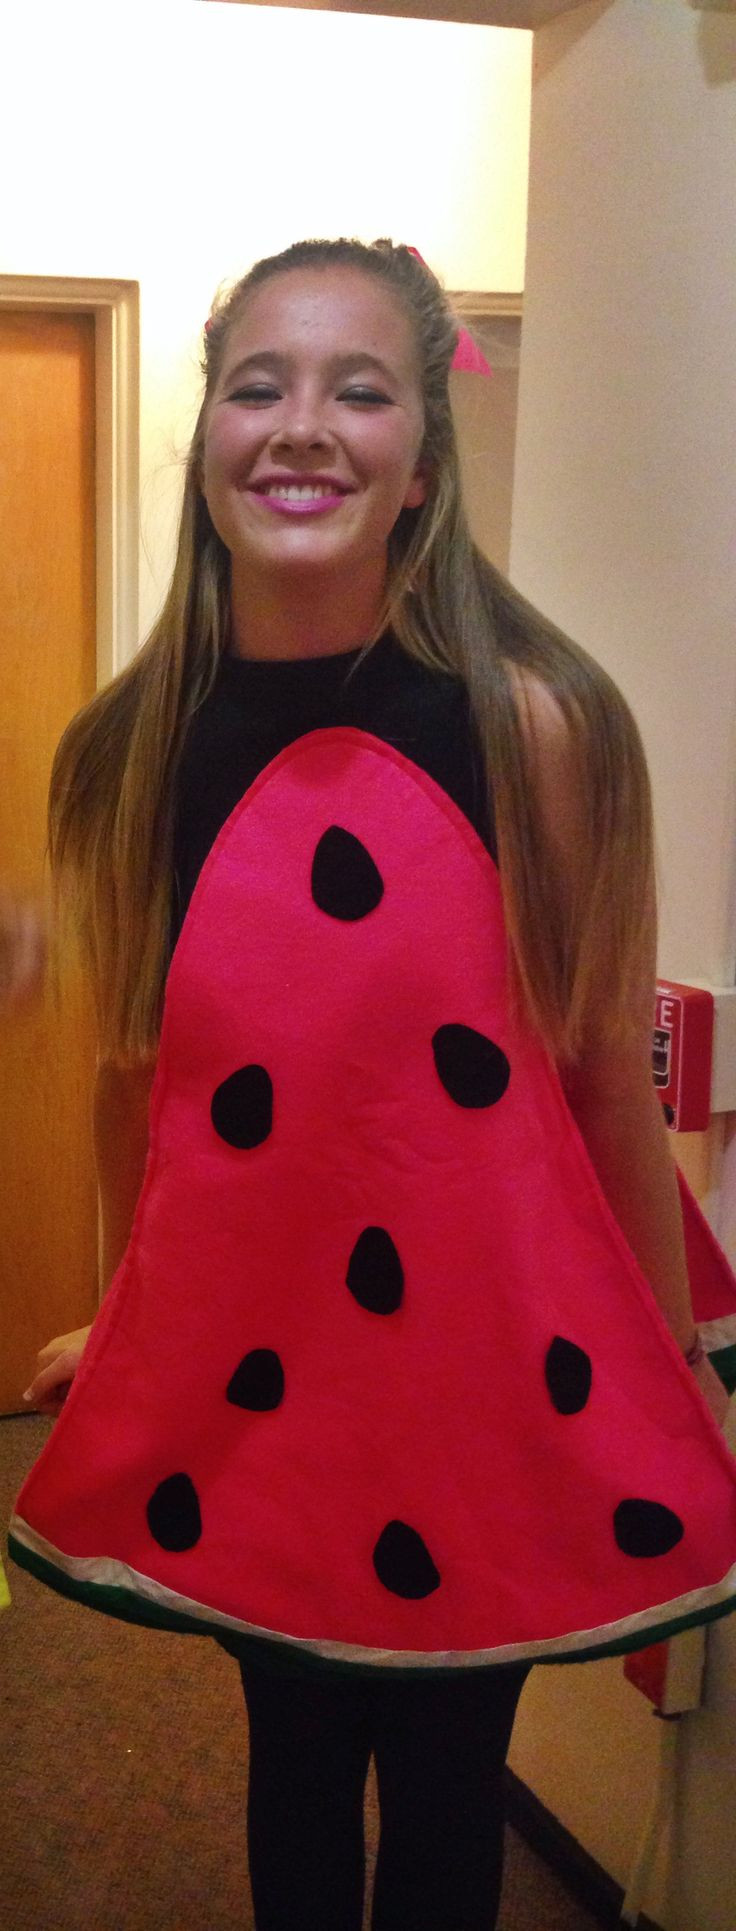 Best ideas about DIY Watermelon Costume
. Save or Pin cute diy watermelon costume Yes Pinterest Now.